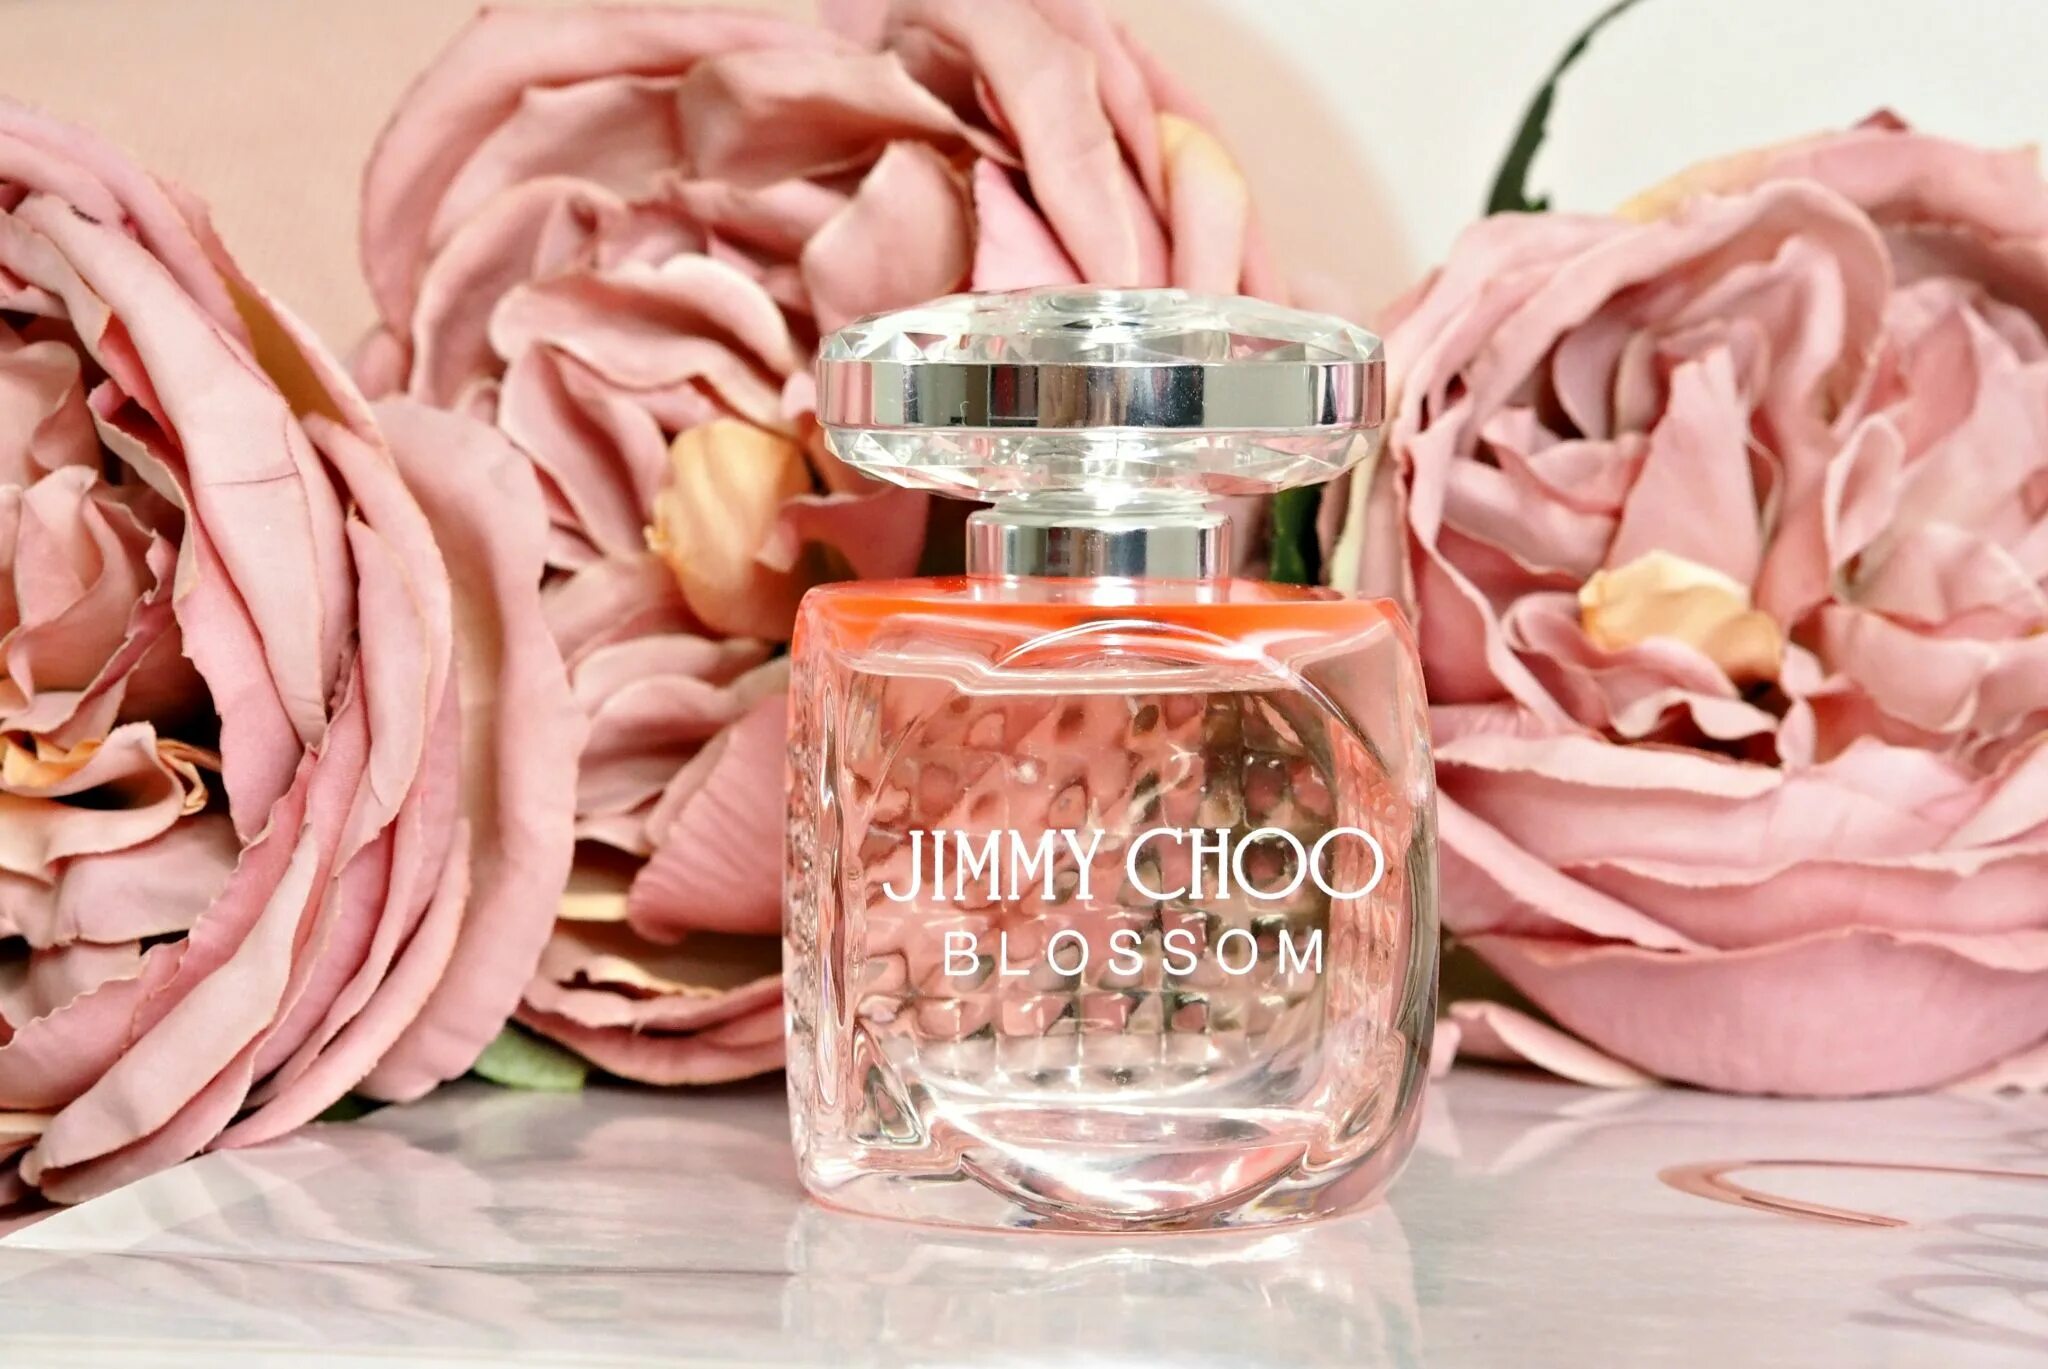 Jimmy Choo Blossom. Jimmy Choo Lady 60ml EDP. Джимми Чу Blossom Special Edition. EDP Jimmy Choo Blossom, 100 ml.